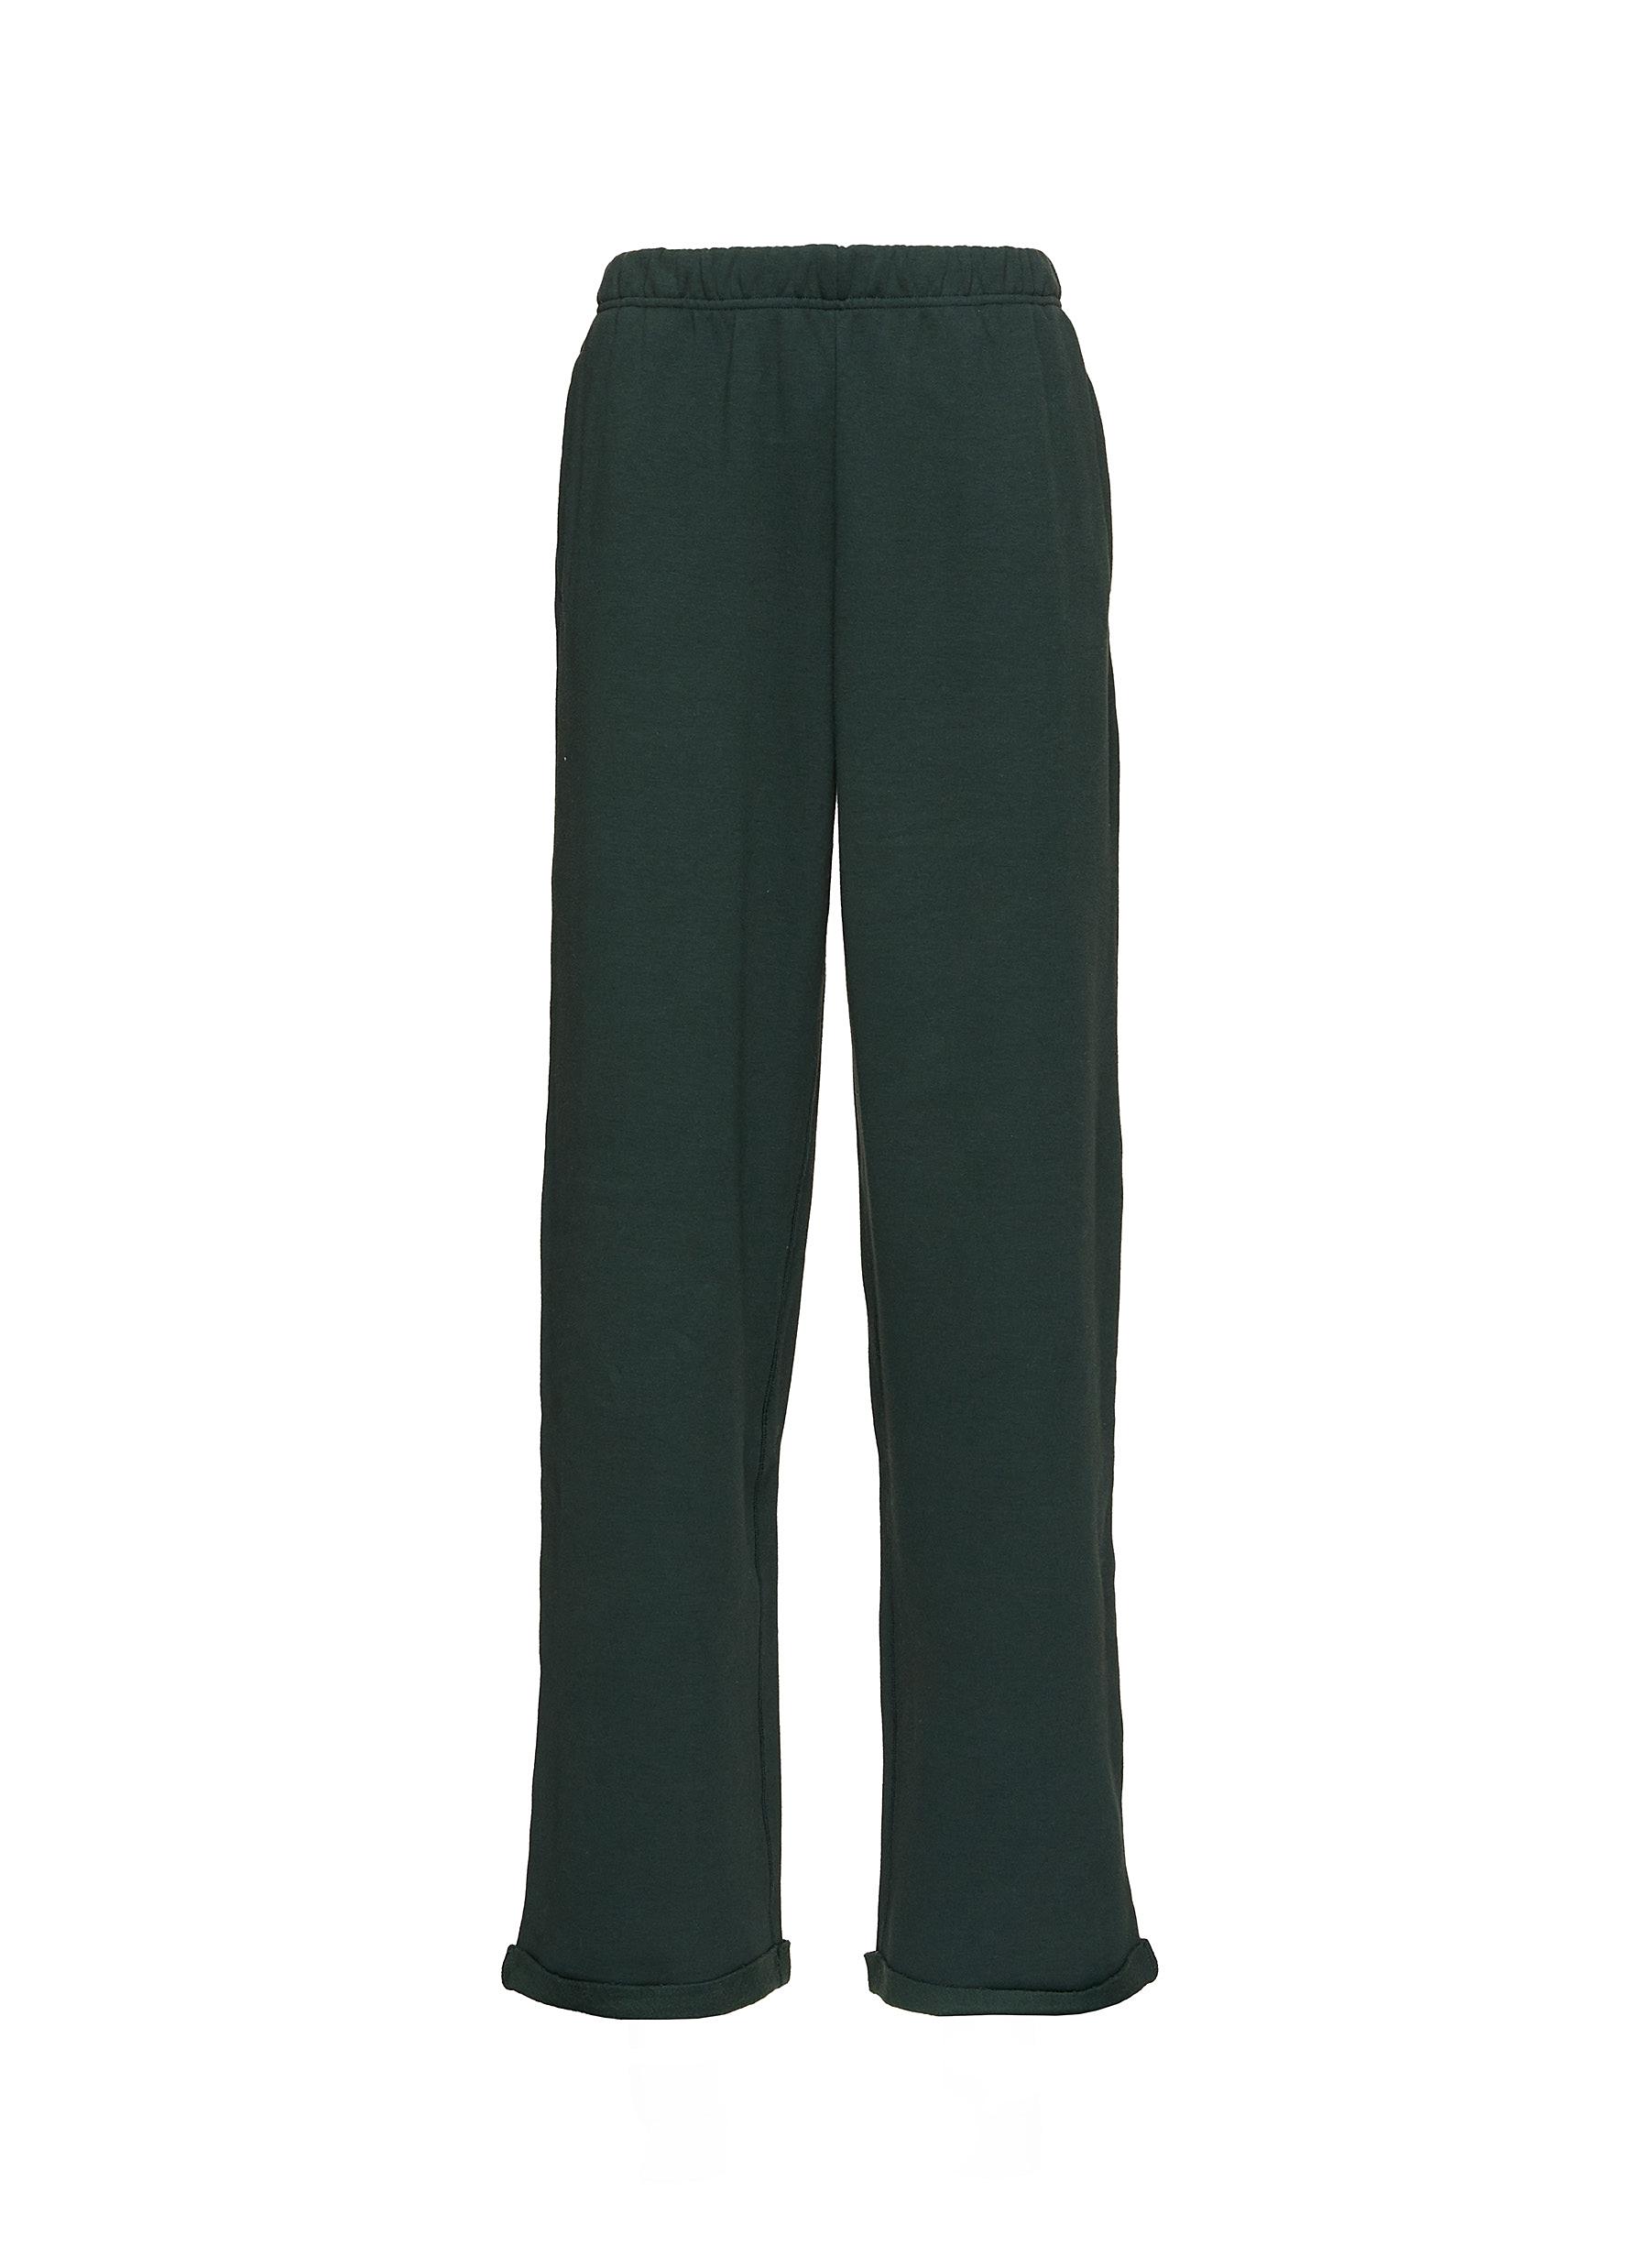 Adjustable straight-fit cotton cargo pants - Women | Bershka